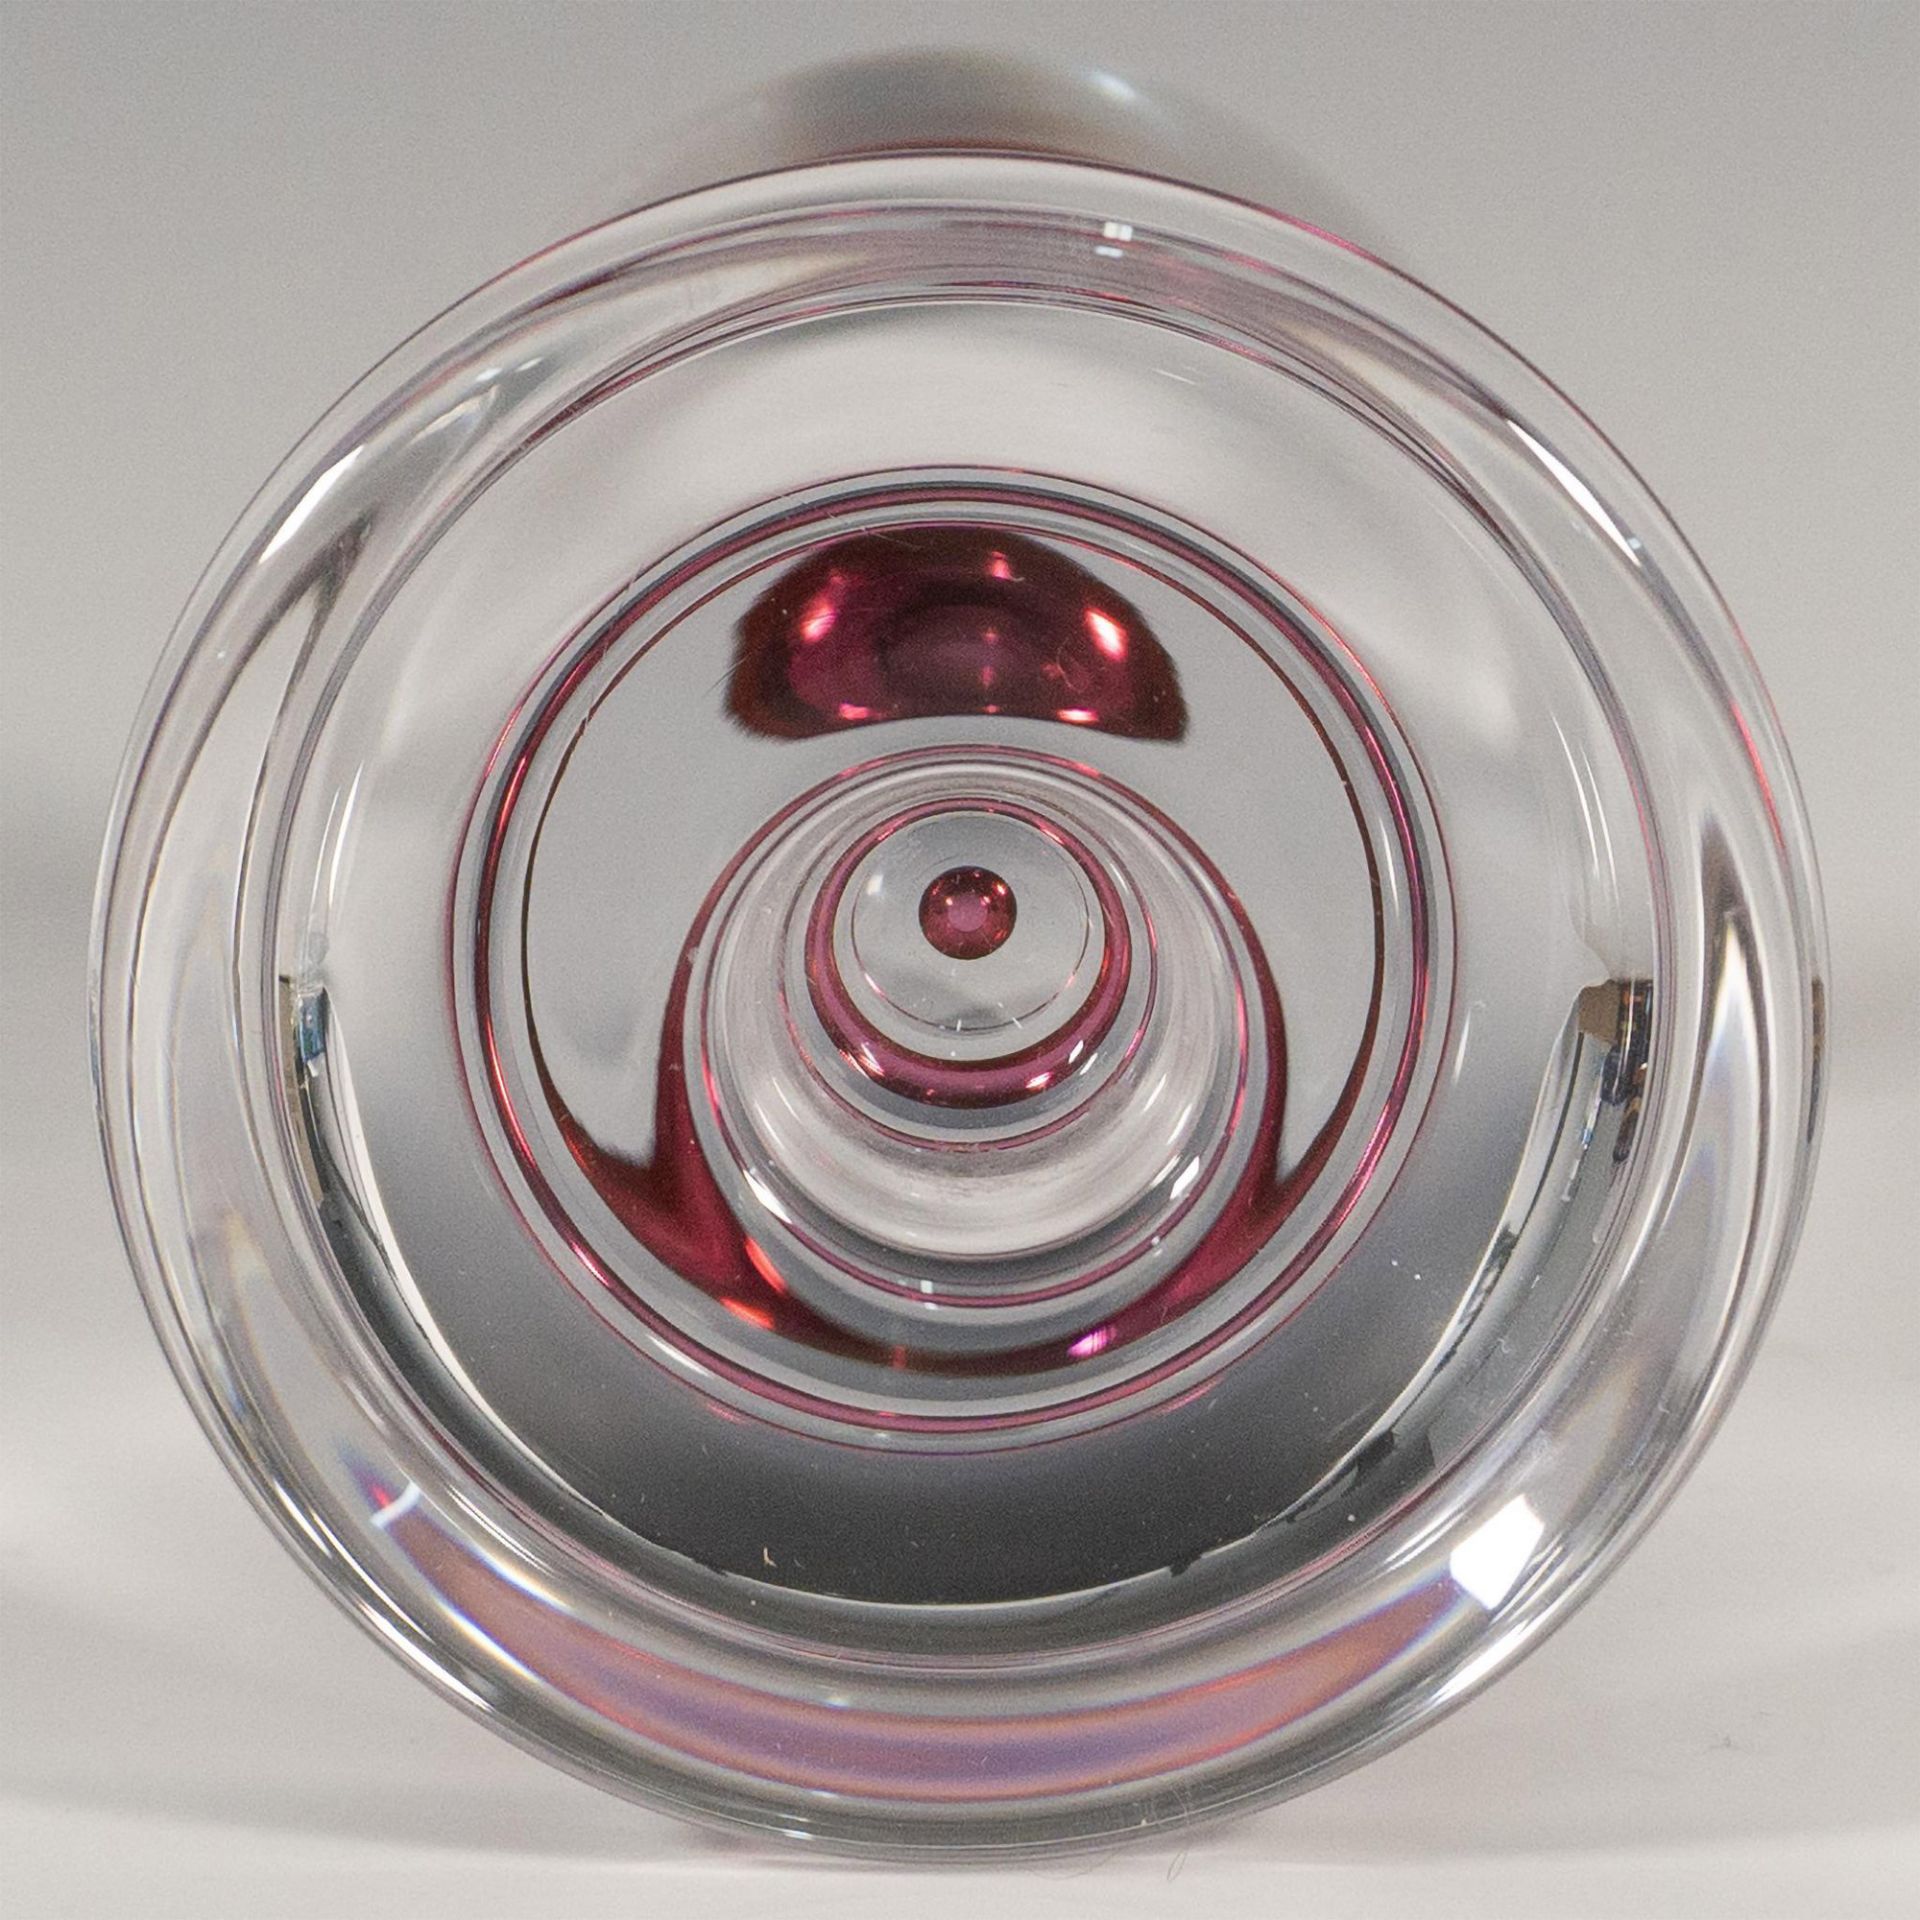 Kosta Boda by Goran Warff Glass Candlestick Holder, Zoom - Image 4 of 4